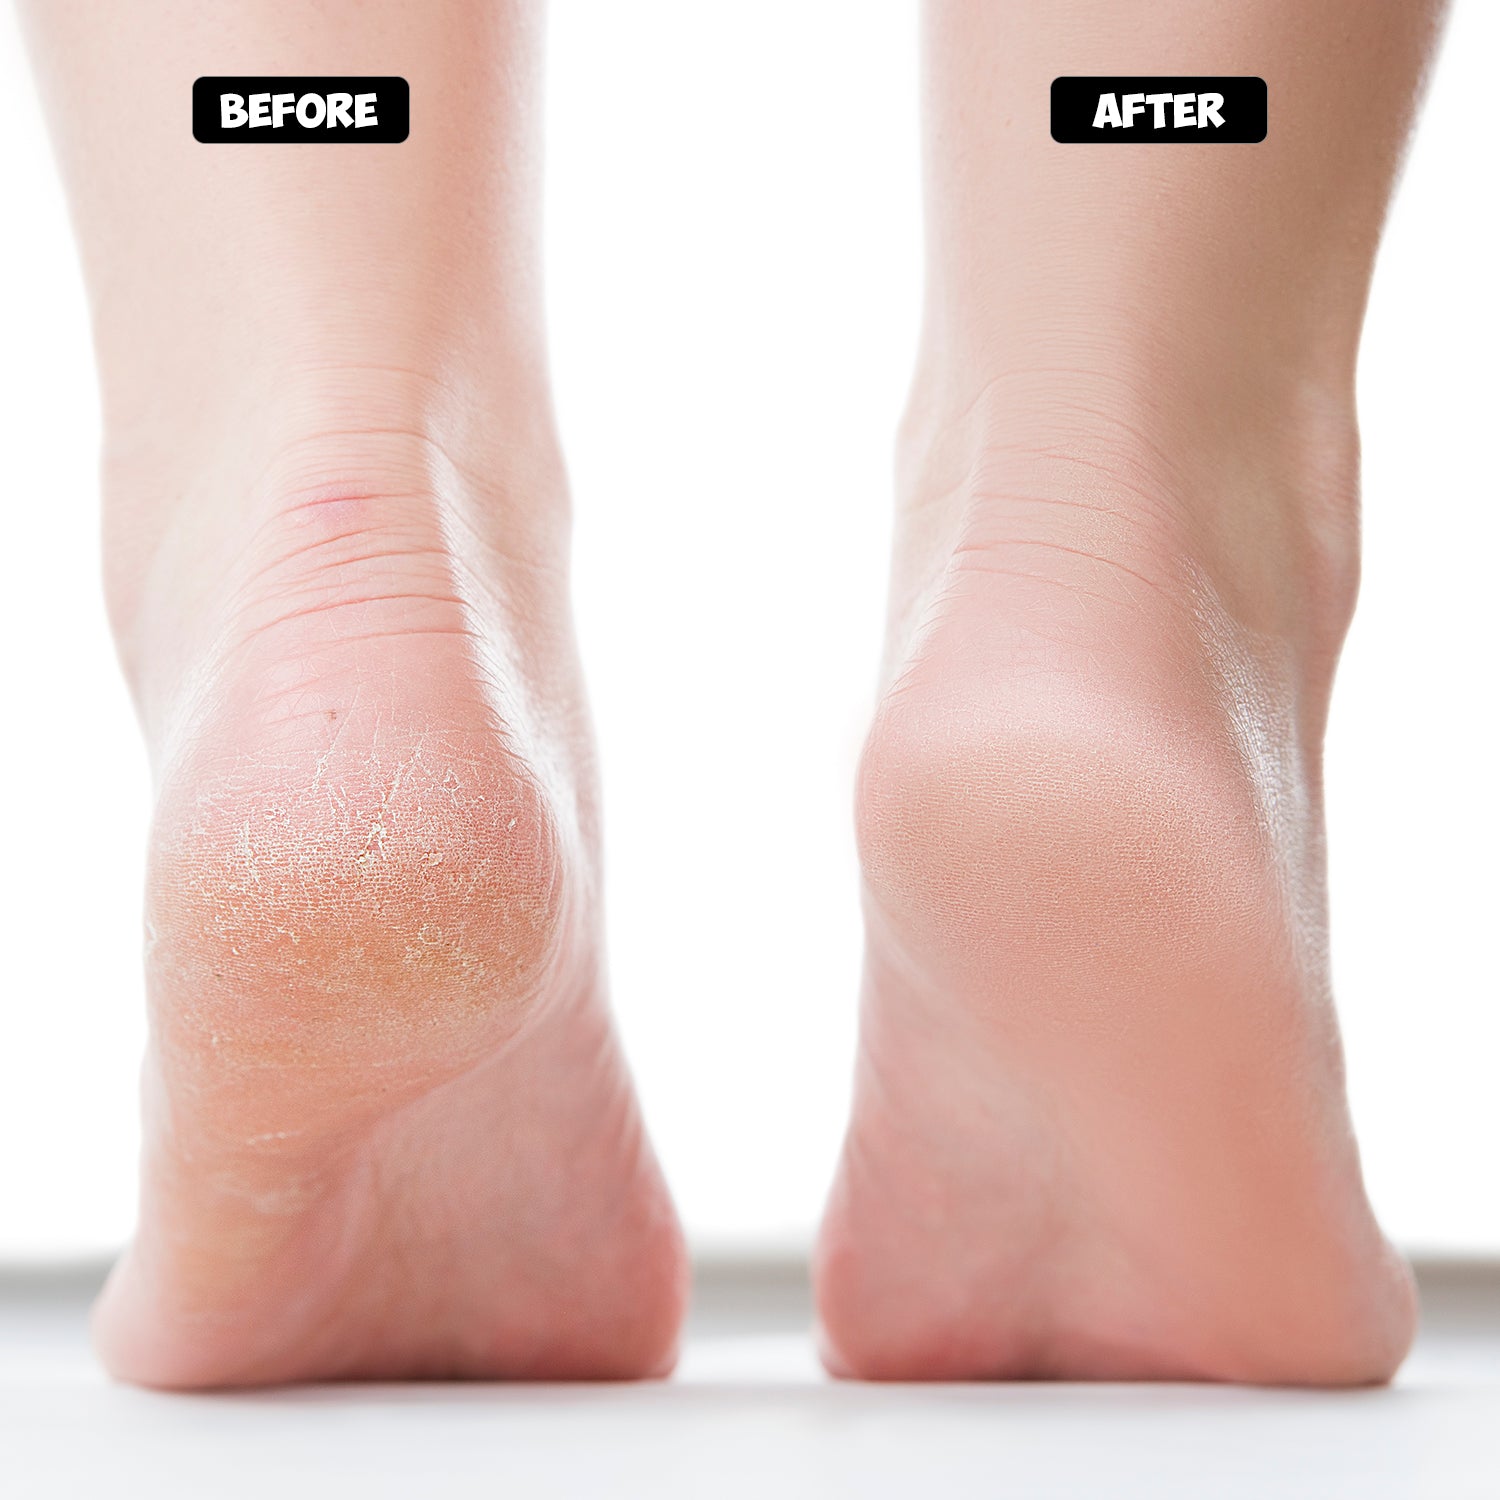 ZenToes Moisturizing Heel Socks to Treat Dry Cracked Heels 2 Pair (Regular,  Cotton Blue/Pink), 4 - Fry's Food Stores